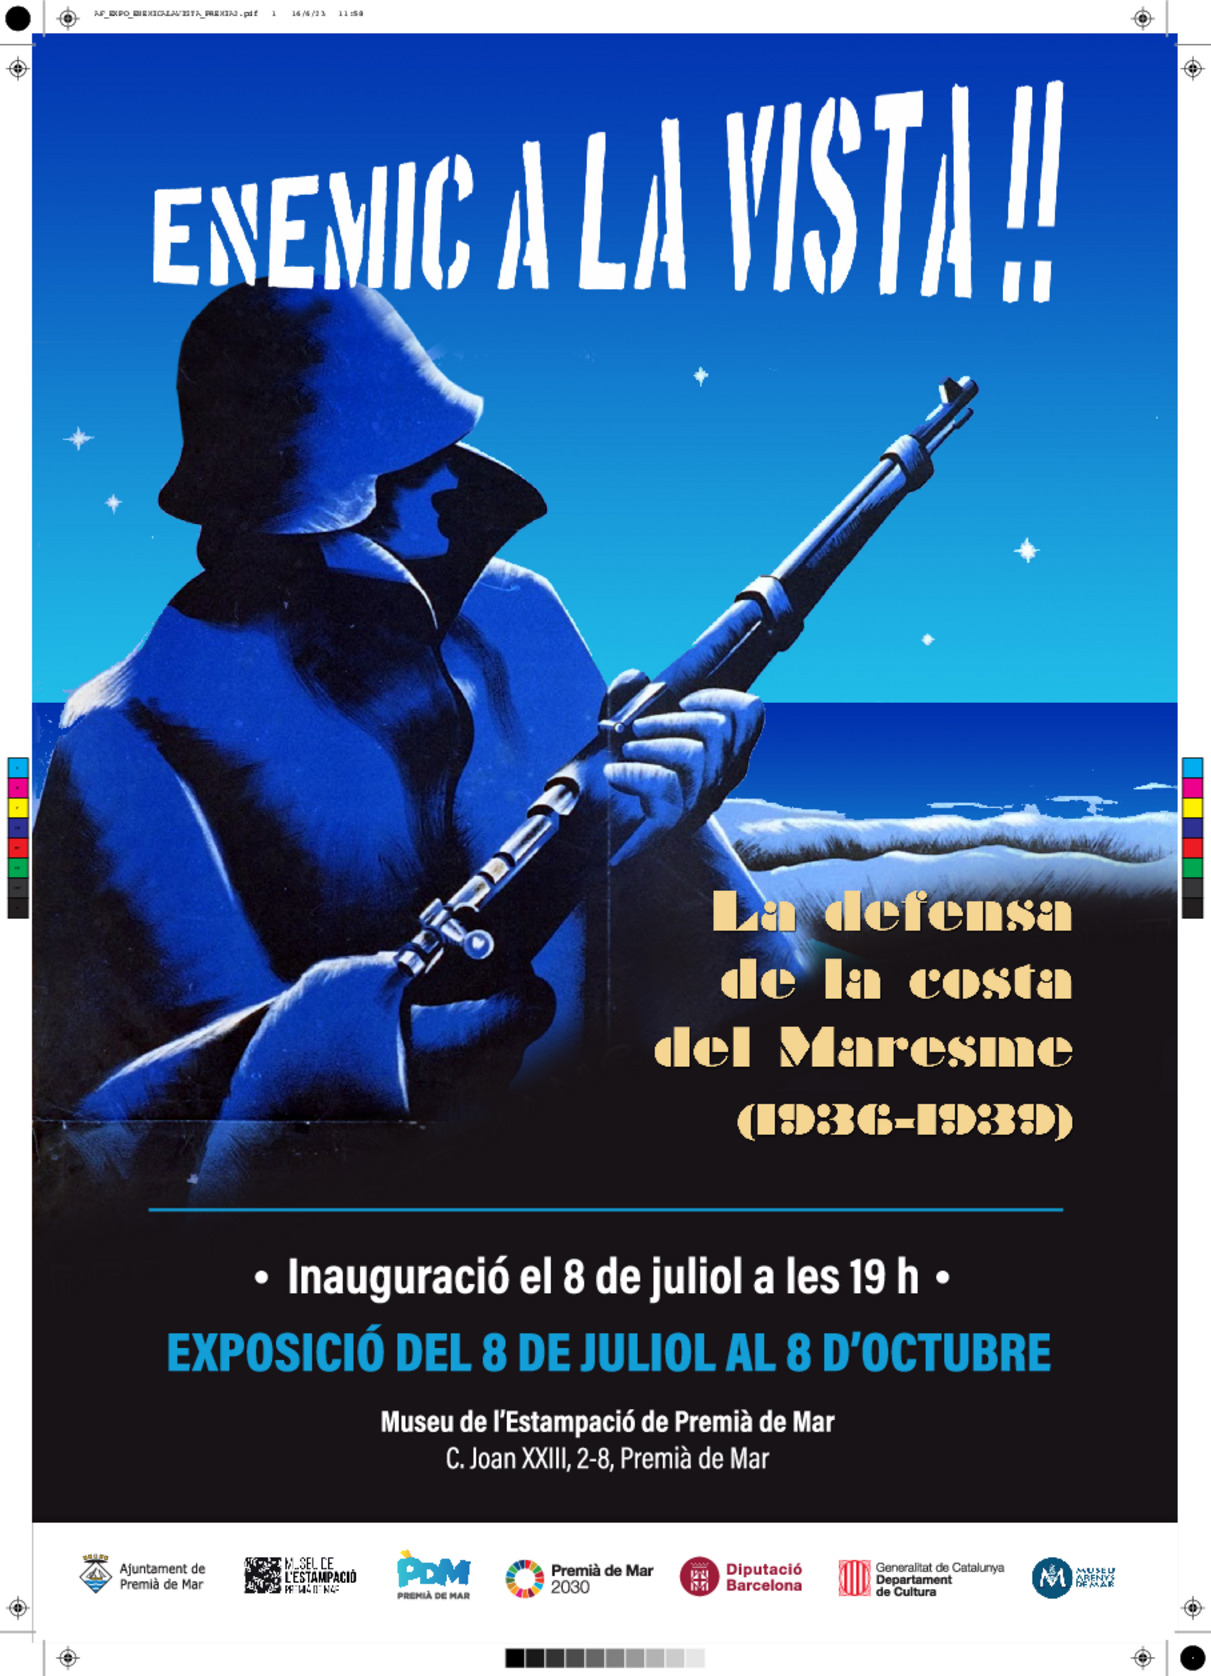 Exposició temporal "Enemic a la vista! La defensa de la costa del Maresme (1936-1939)"